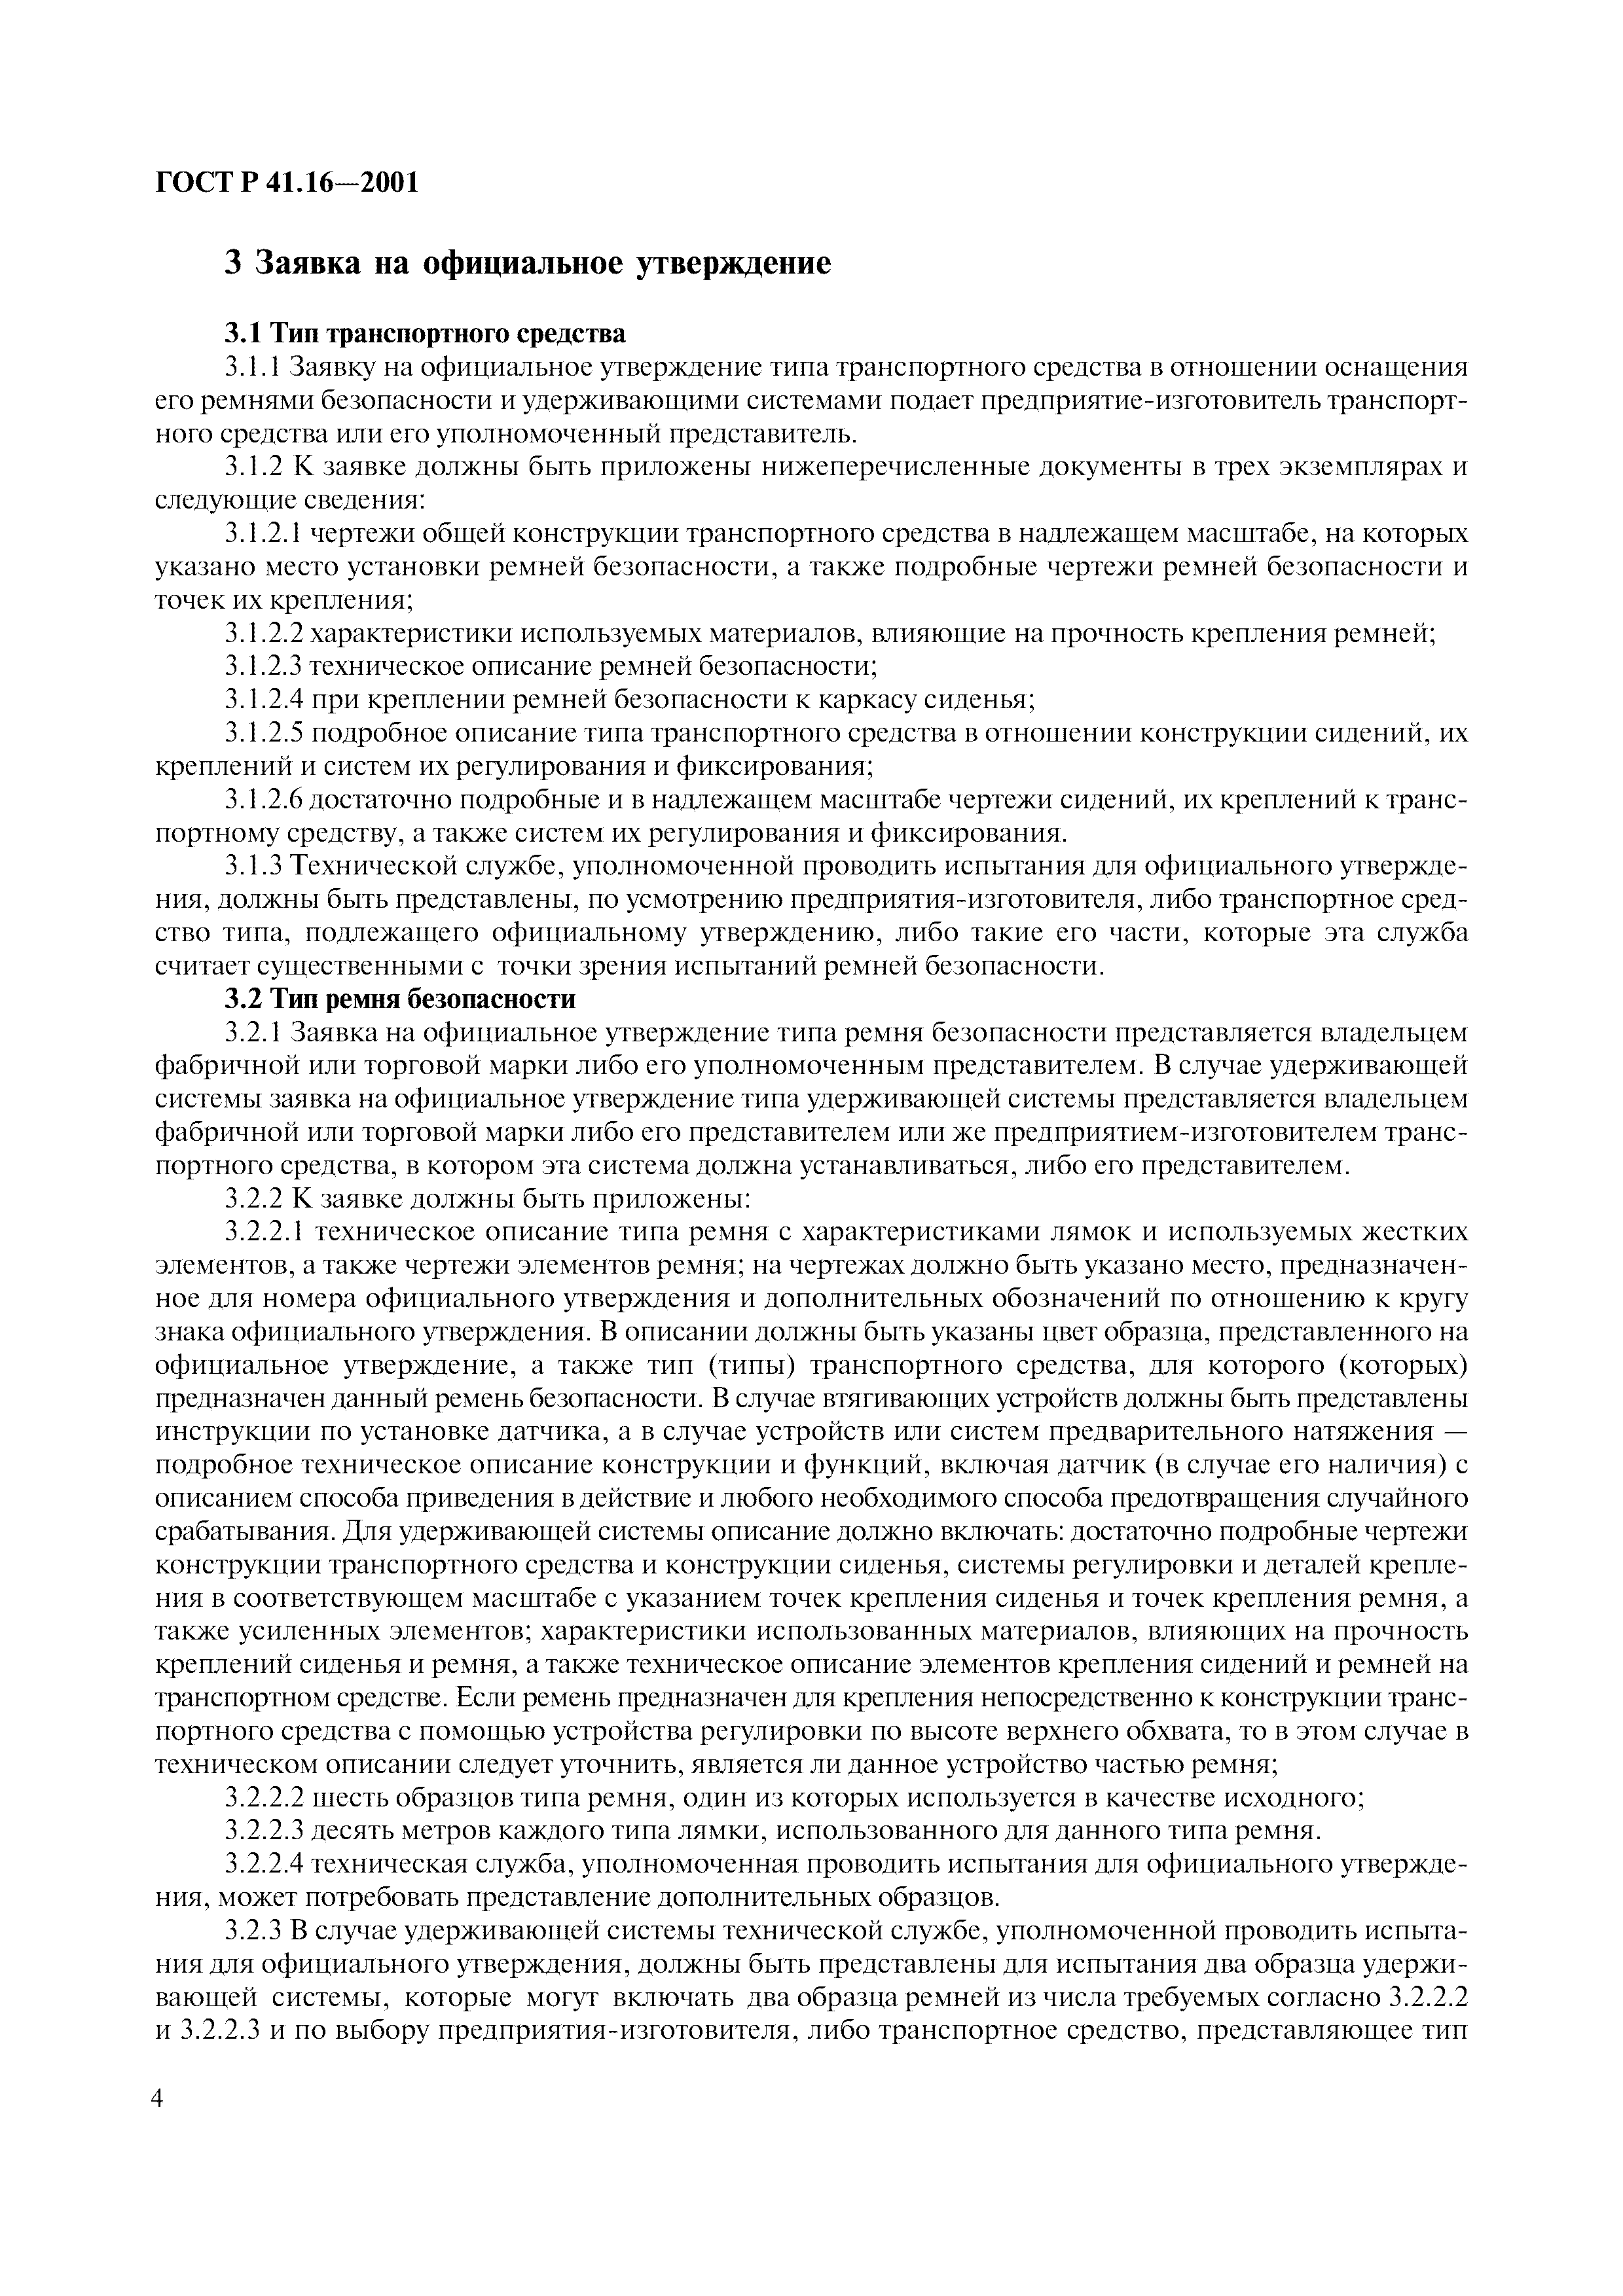 ГОСТ Р 41.16-2001. Страница 7